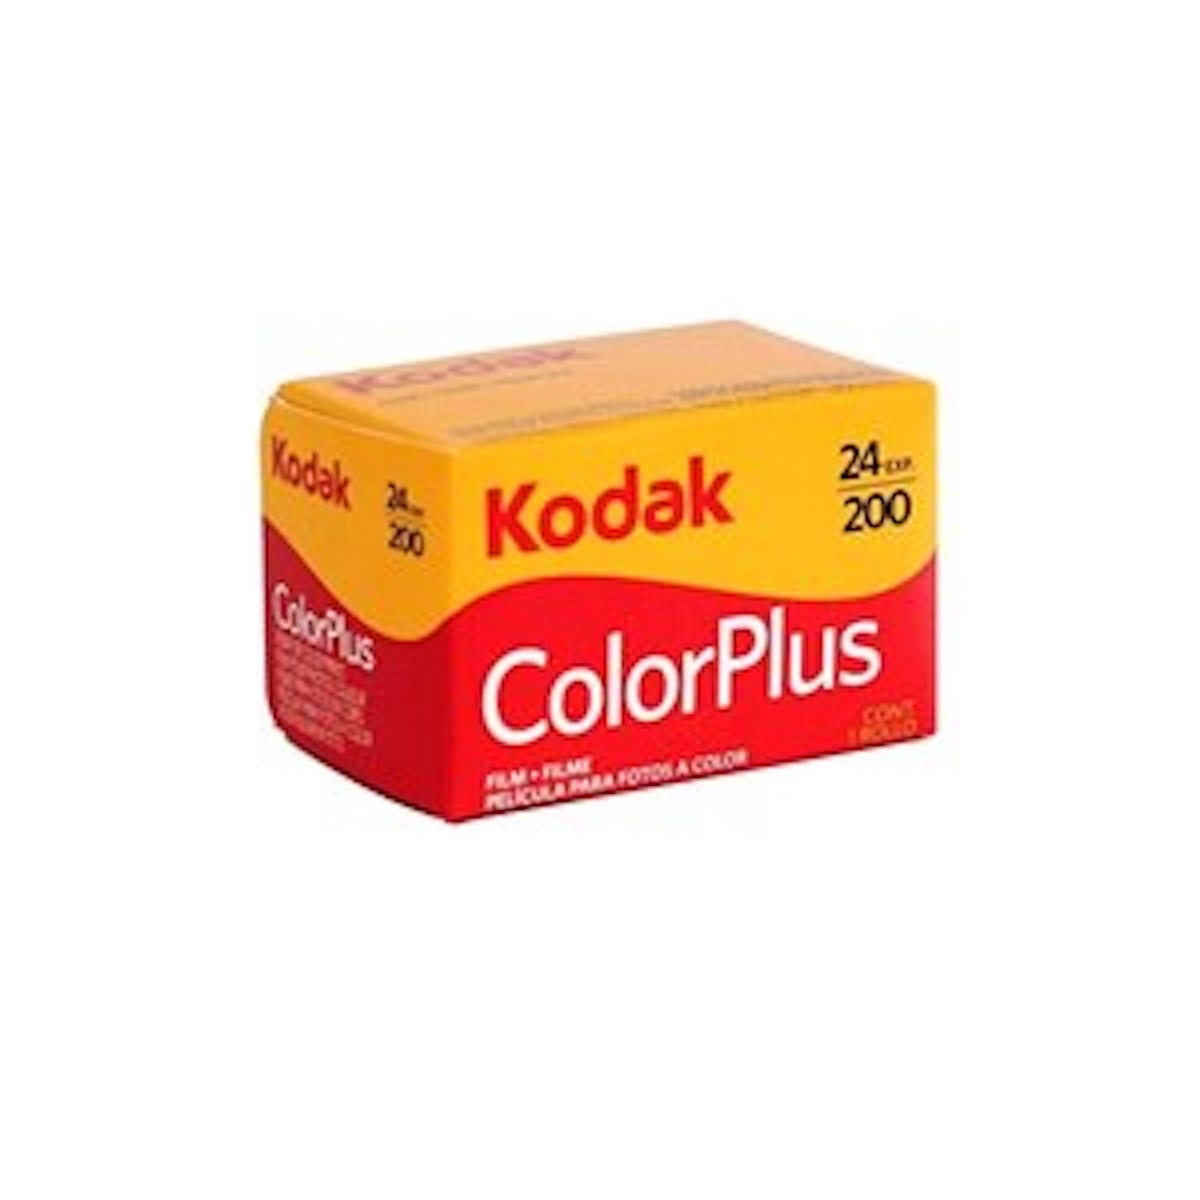 Kodak Colorplus 200 135/24 Film